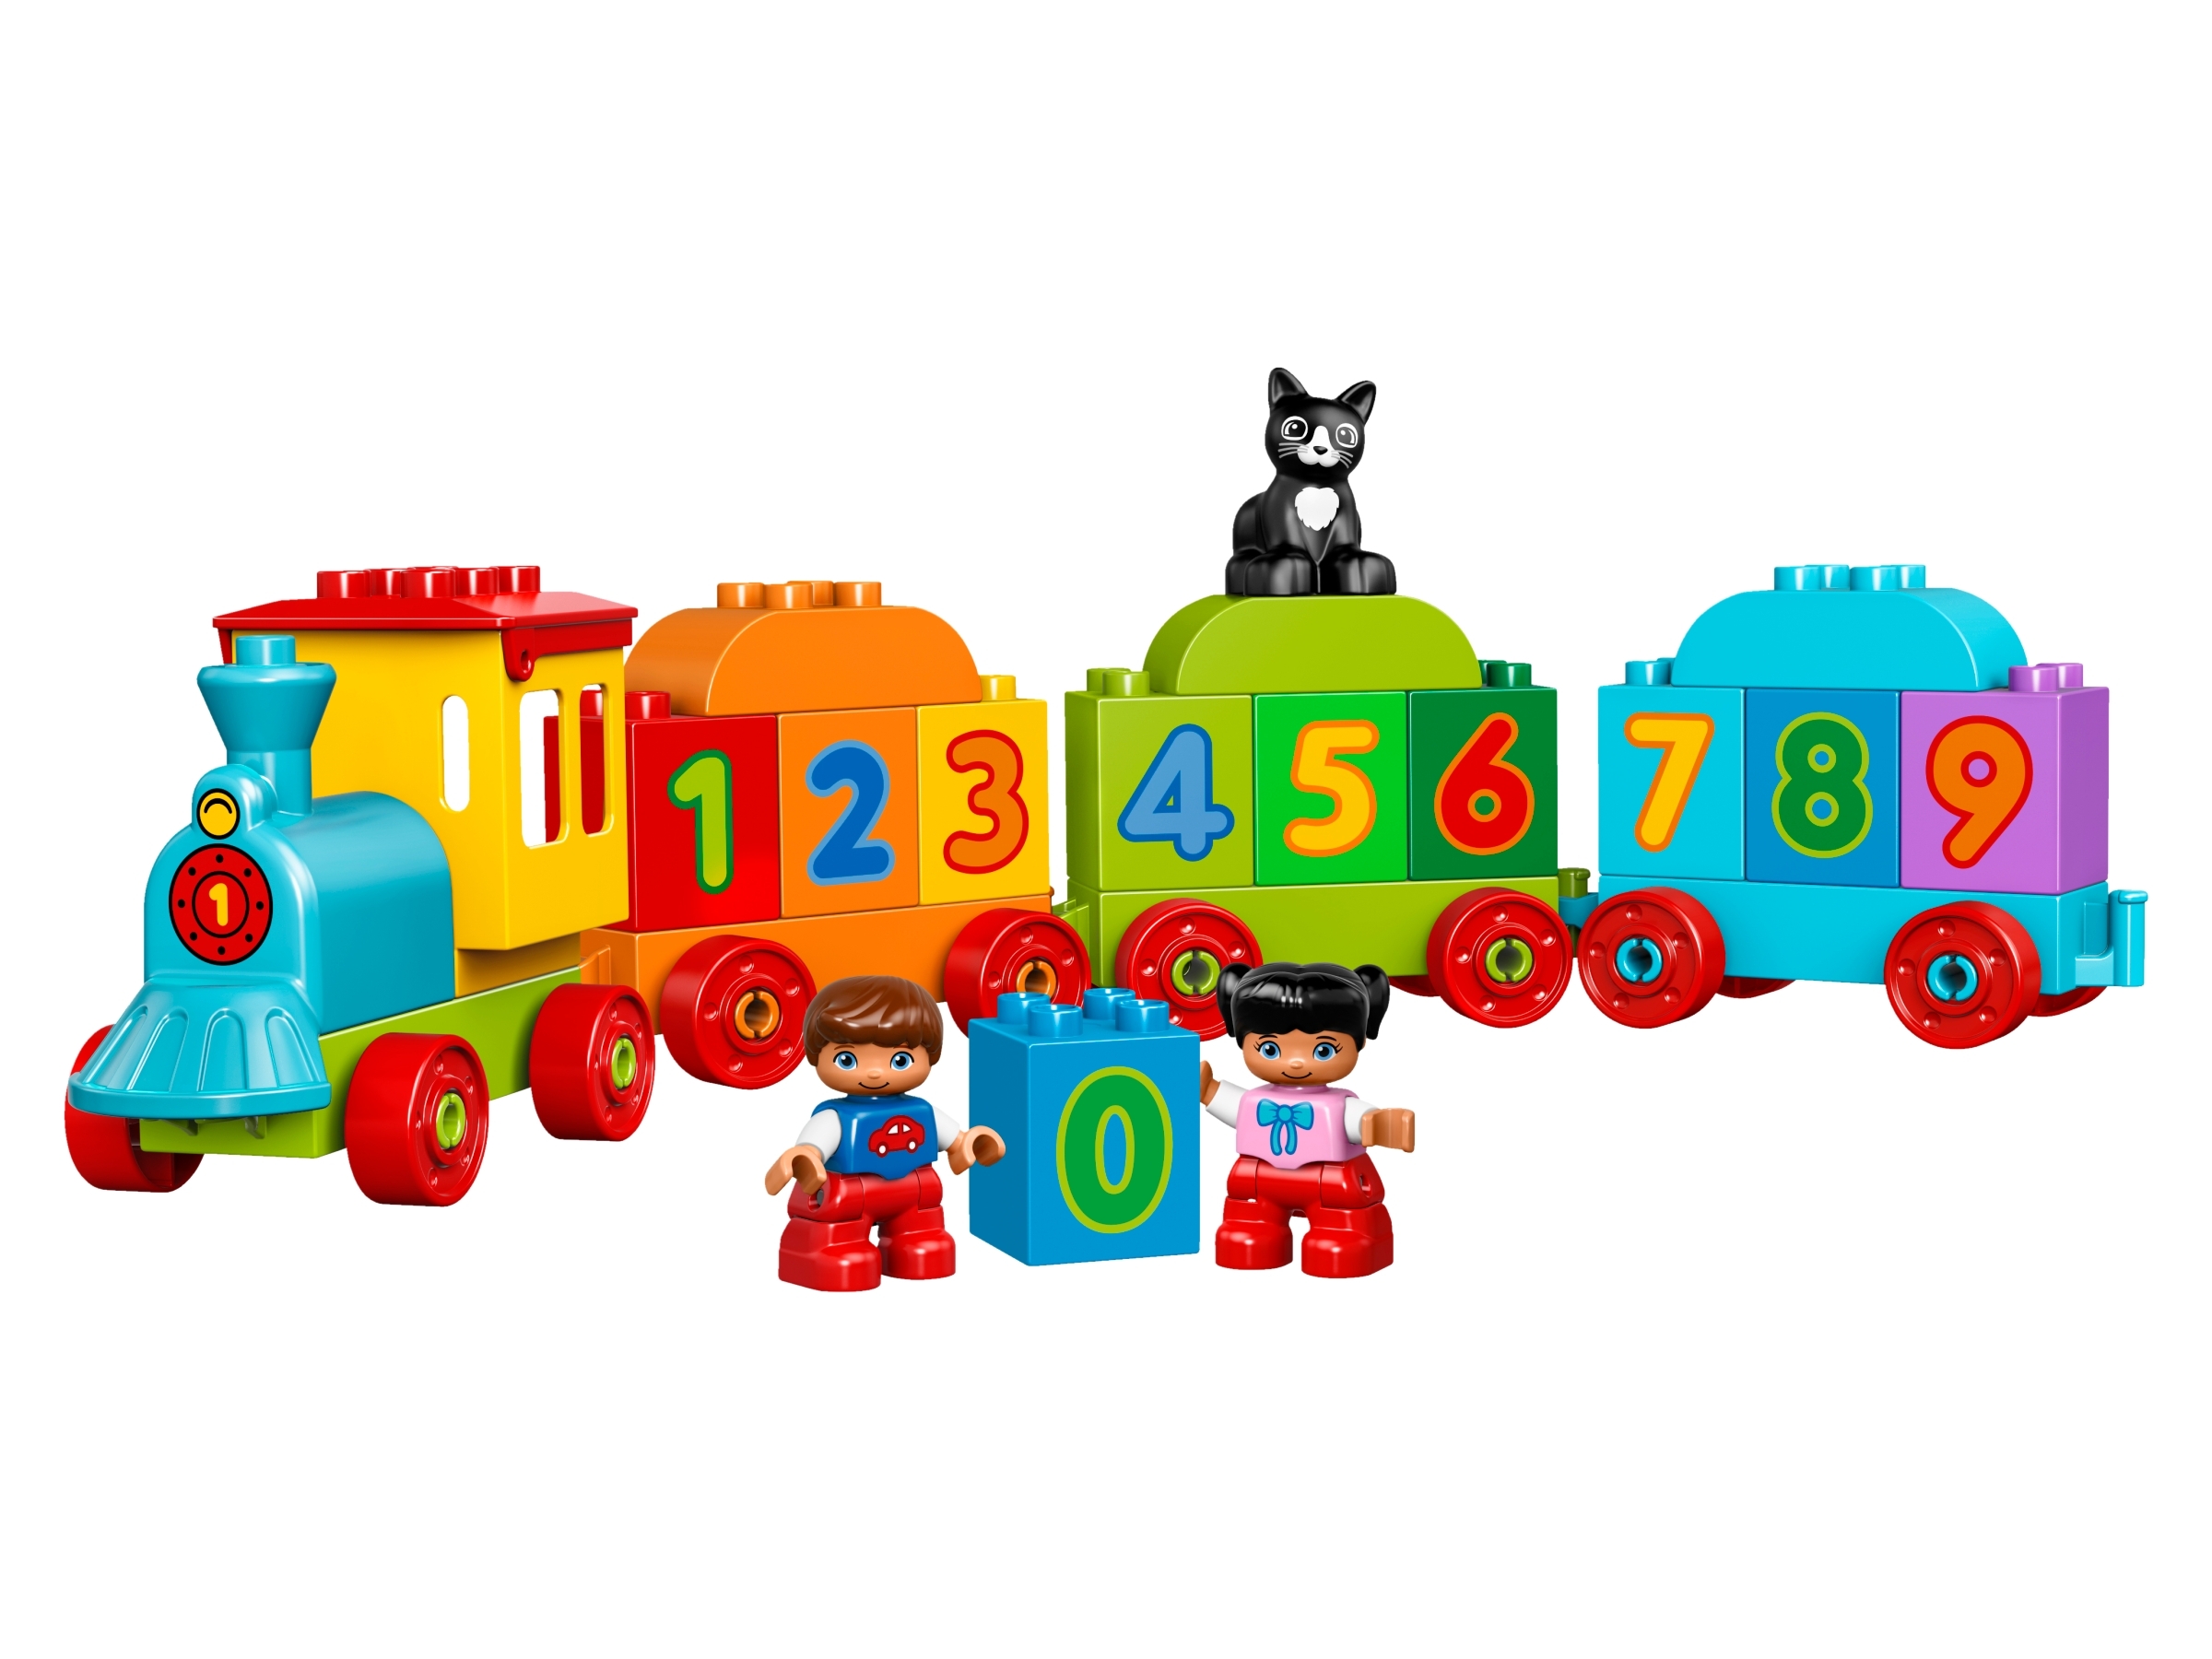 LEGO DUPLO NUMBER 10 Train Replacement 2 x 2 x 2 BLOCK Building Brick